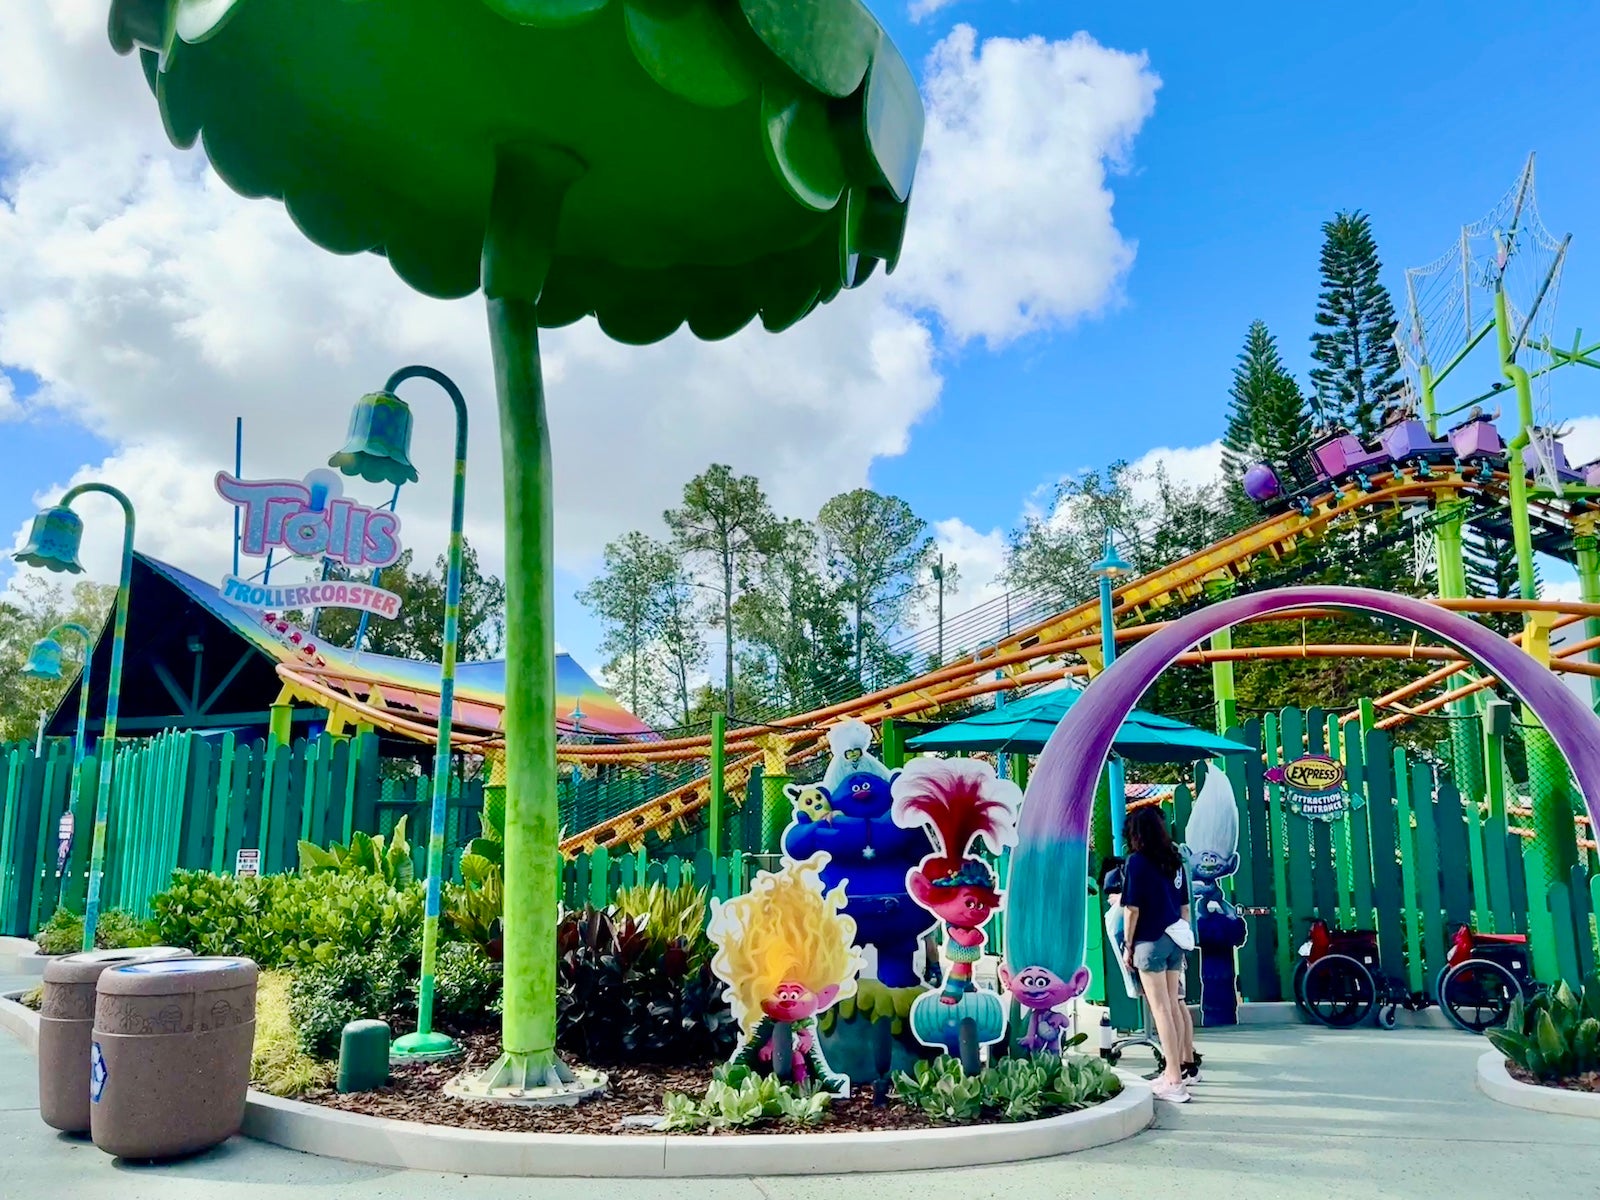 Trollercoaster in DreamWorks Land at Universal Orlando Resort